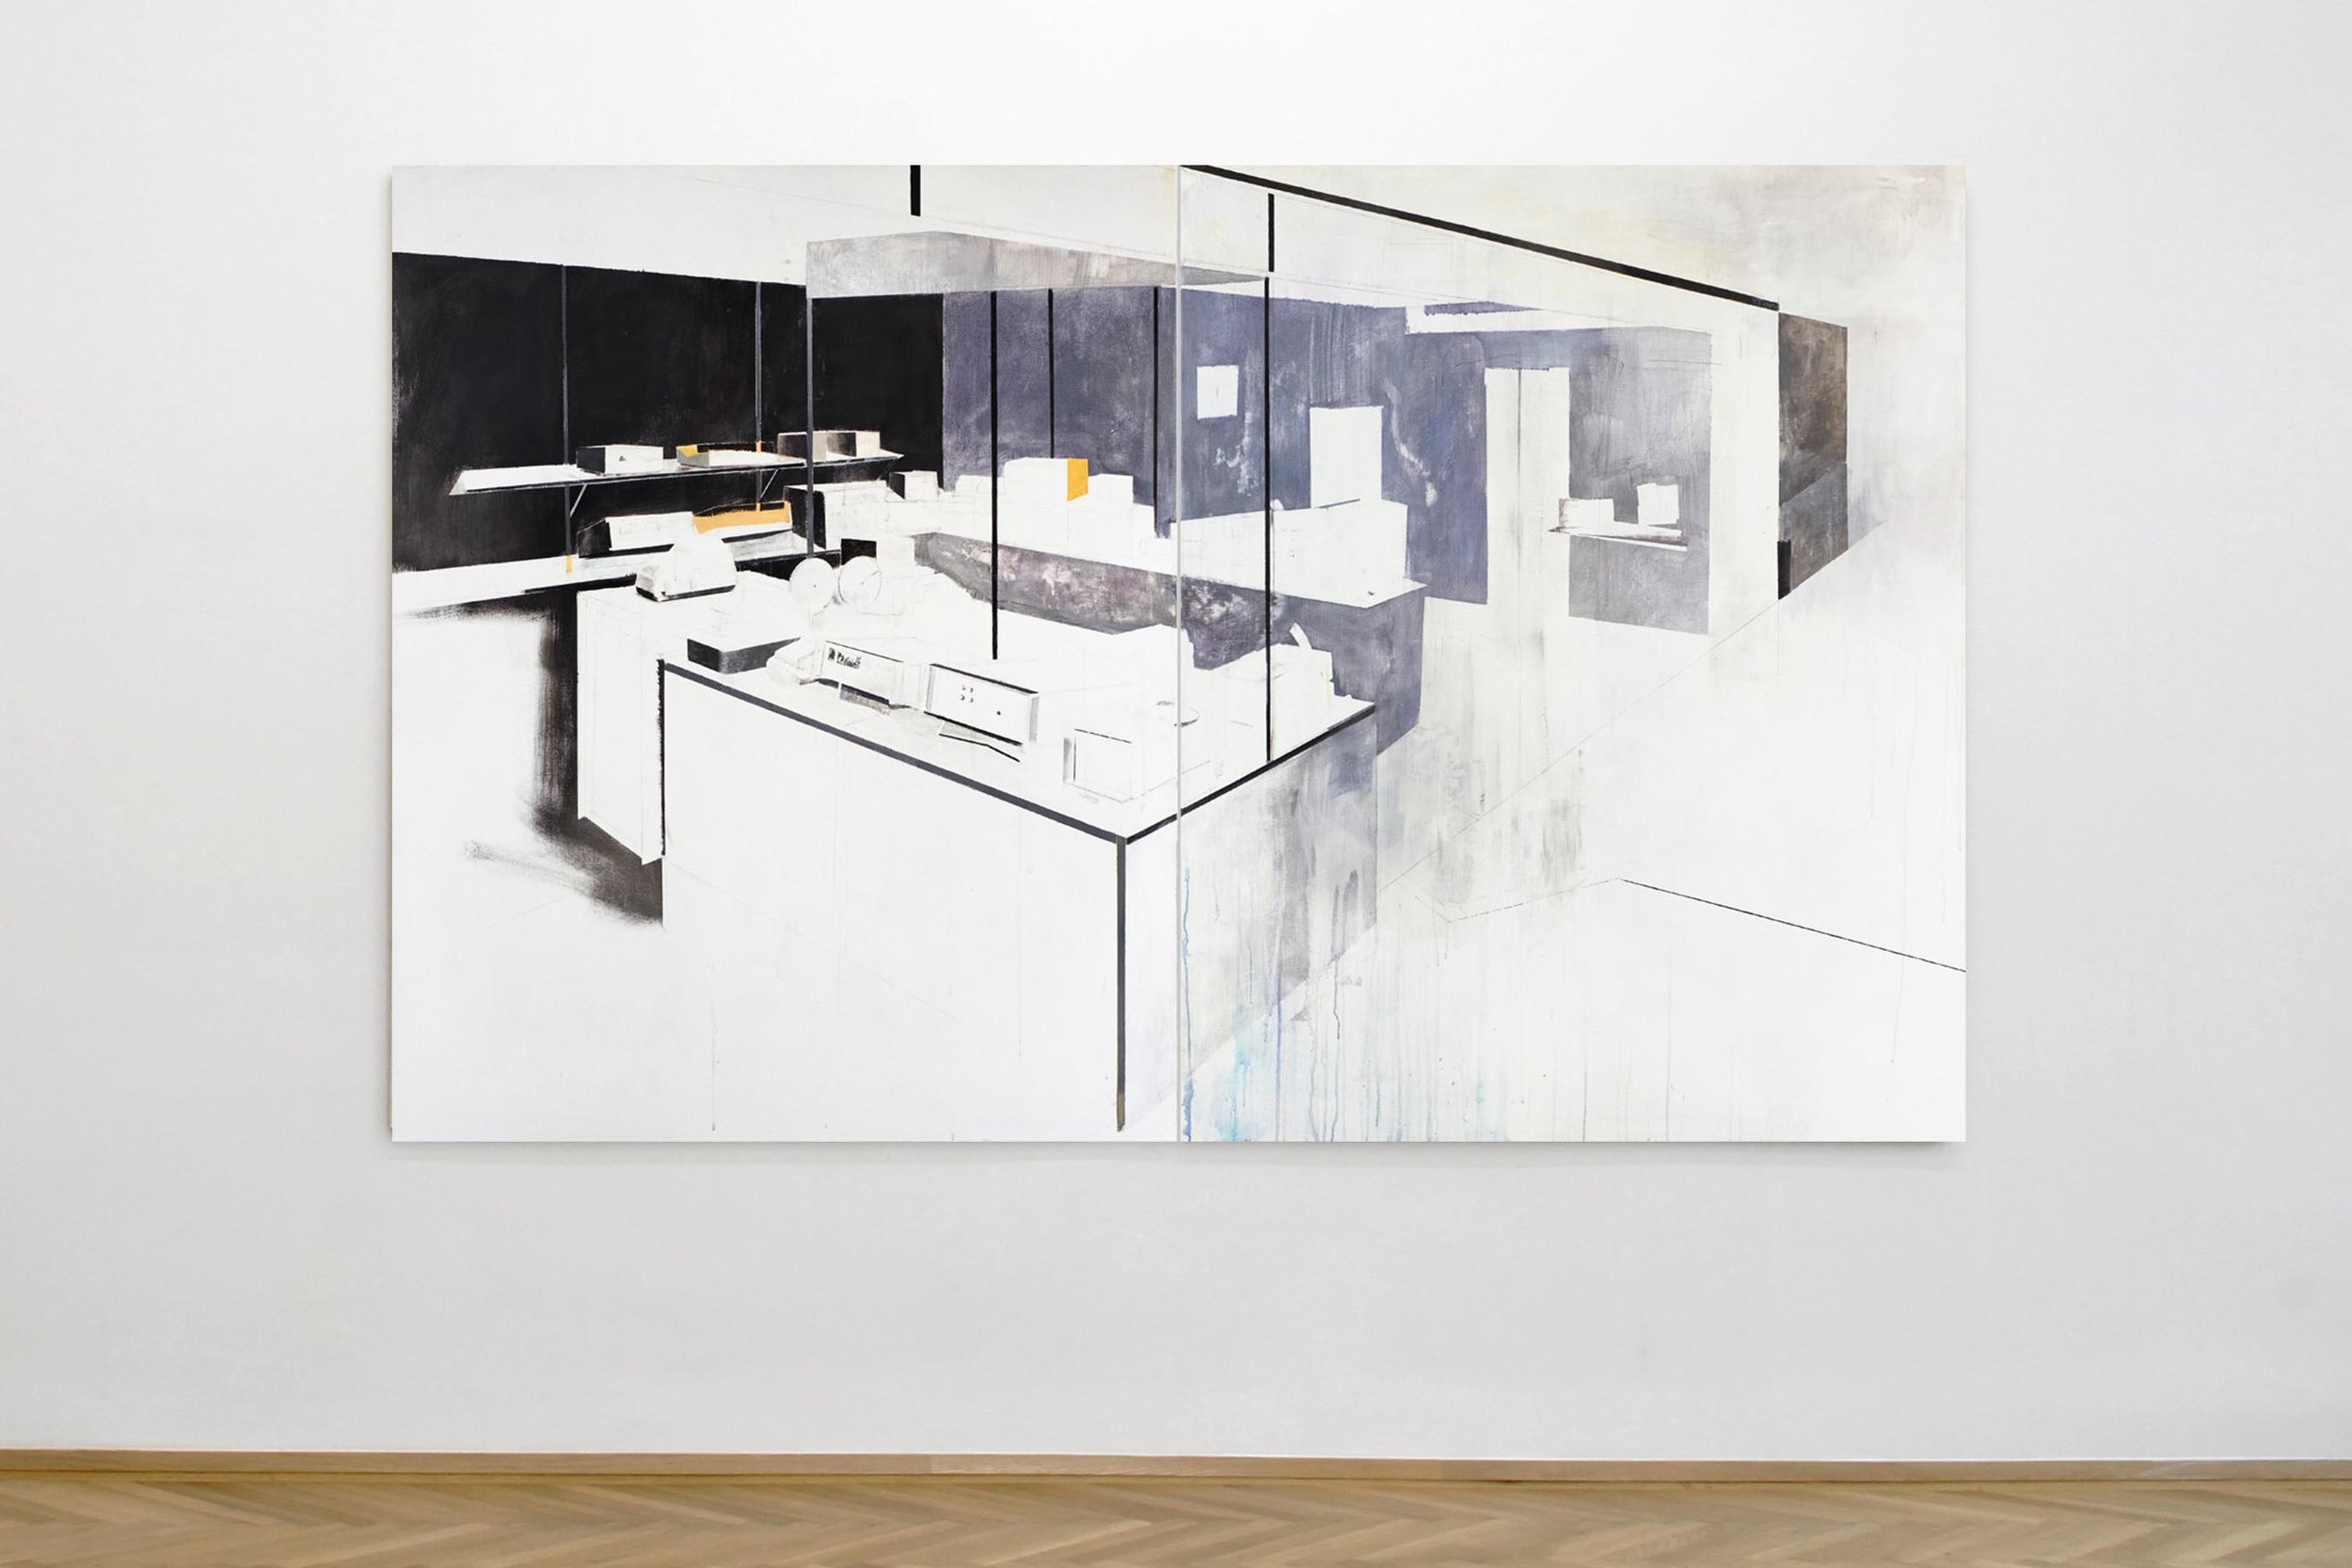 Agnes Fuchs, STAND (FAIR) No. 2, Representation System, 2013, acrylic on canvas, 150 x 240 cm